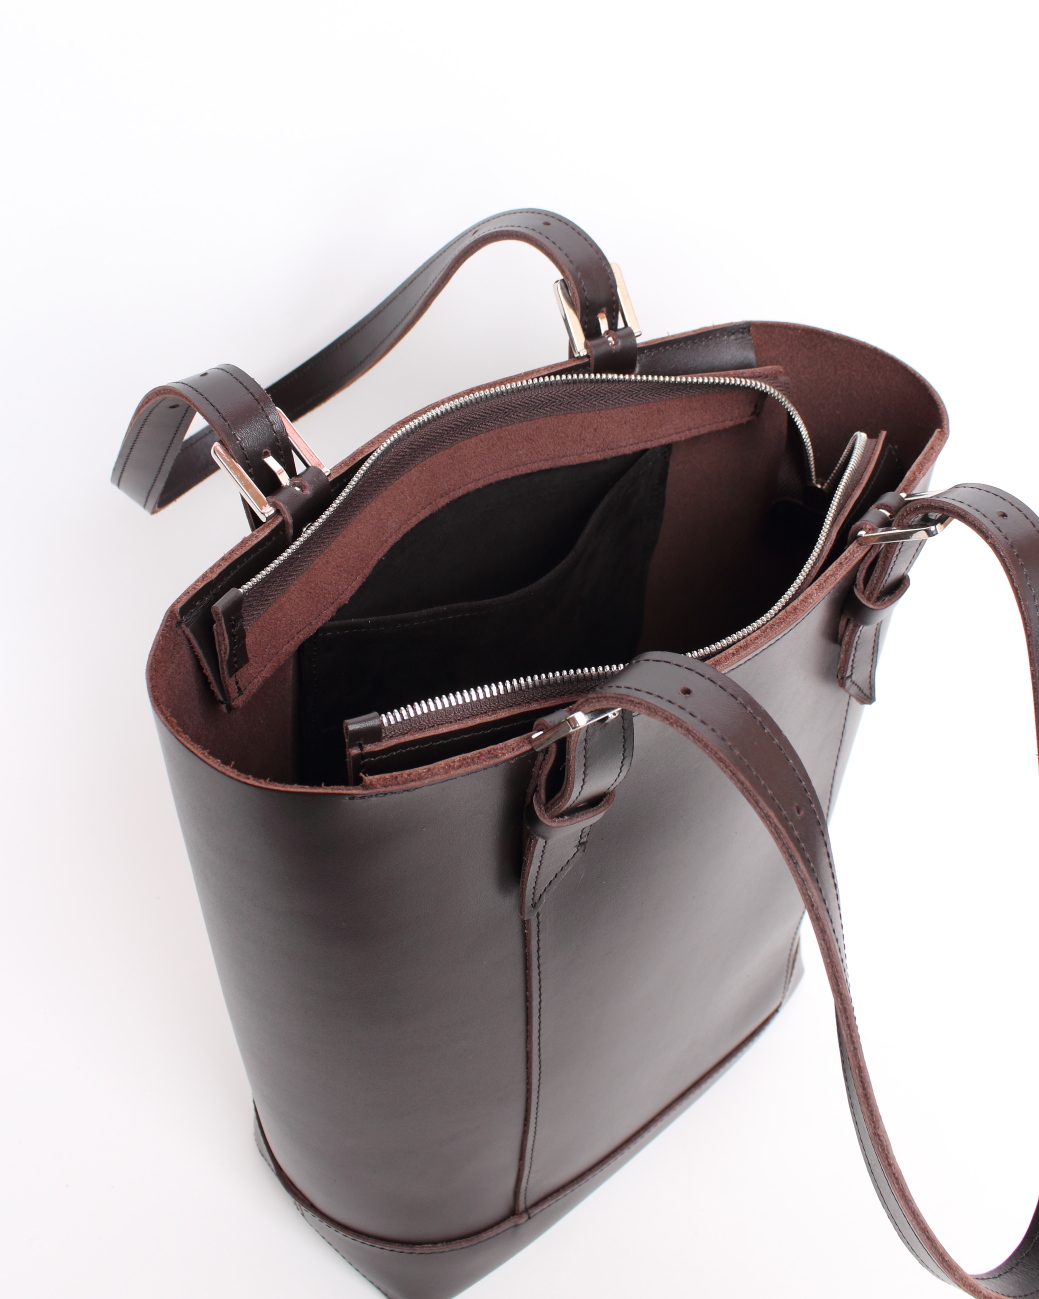 Женская кожаная сумка-шоппер коричневая A0142 ZIPPER